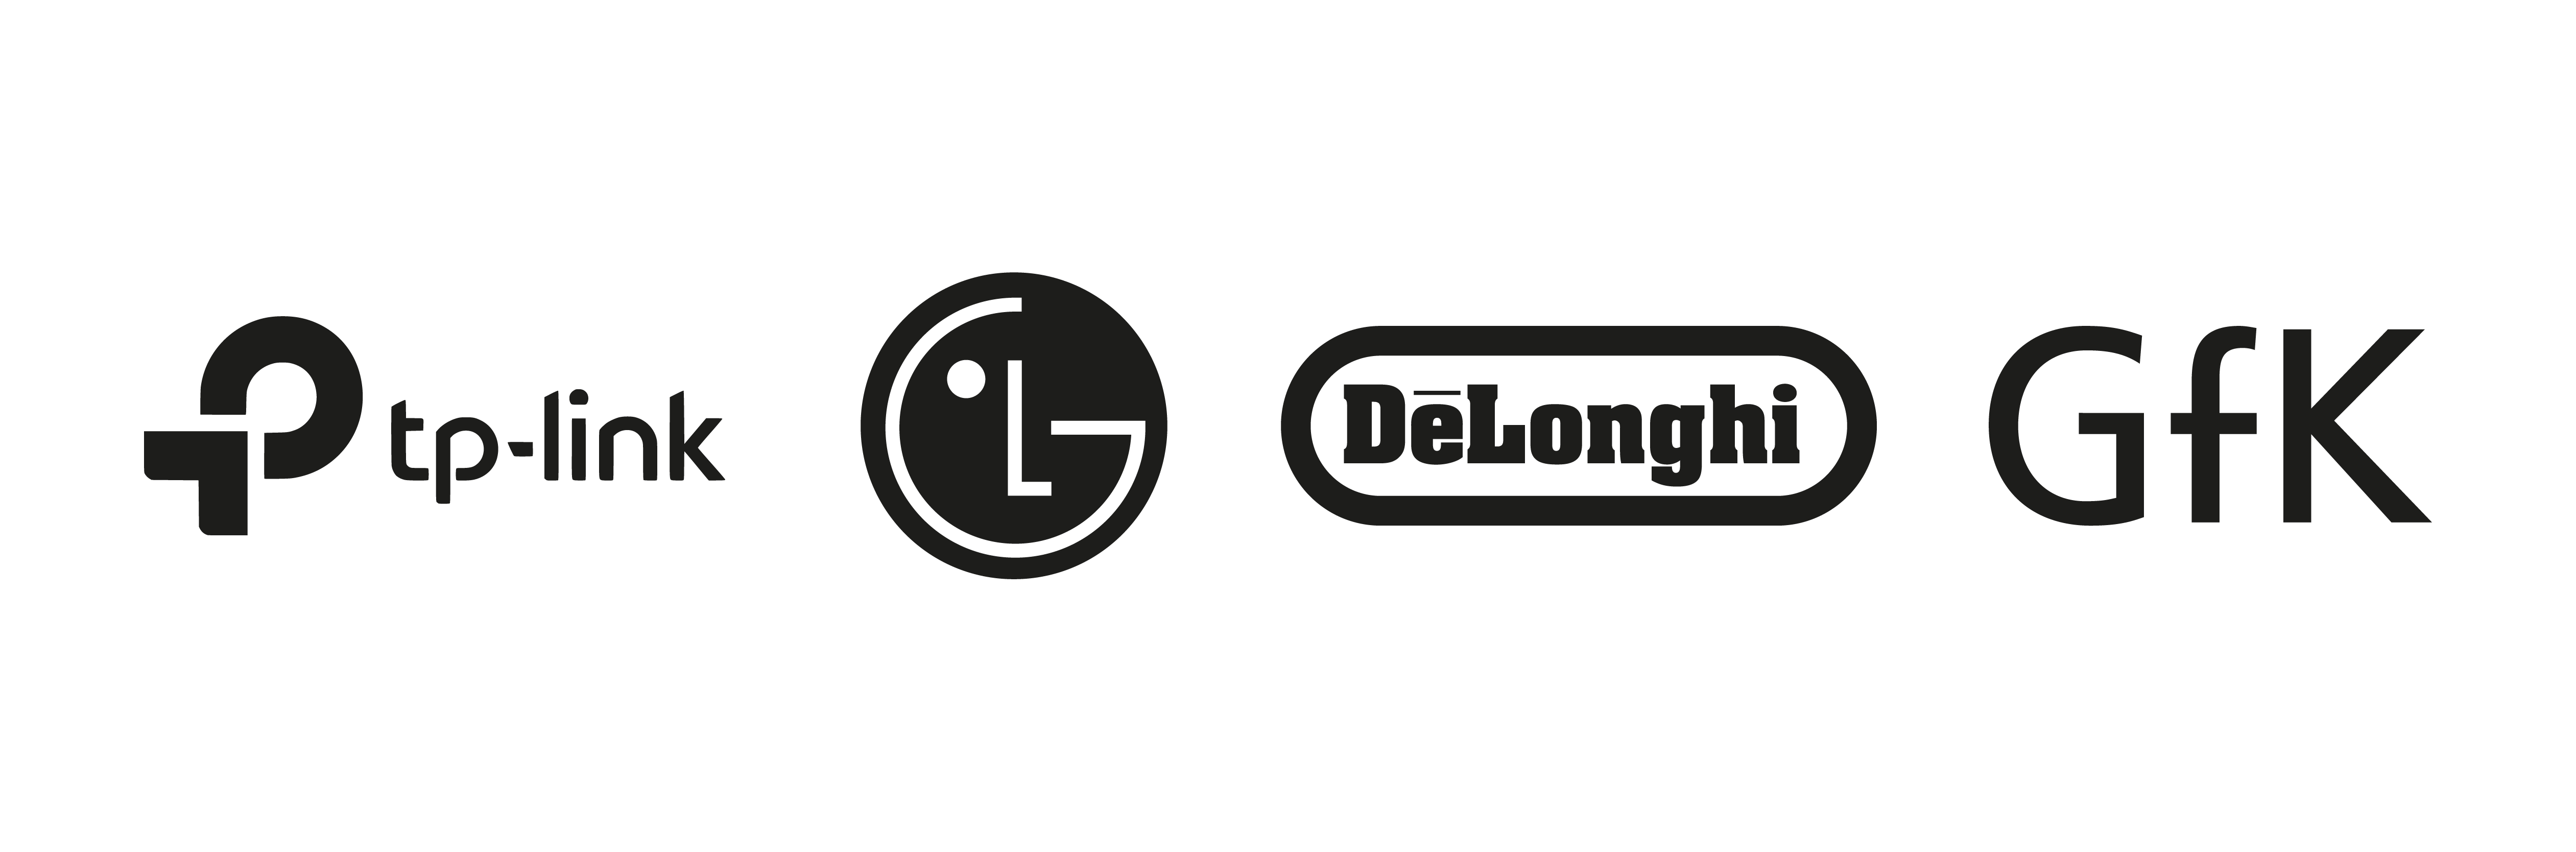 LG+TP Link+Delonghi+GfK_schwarz